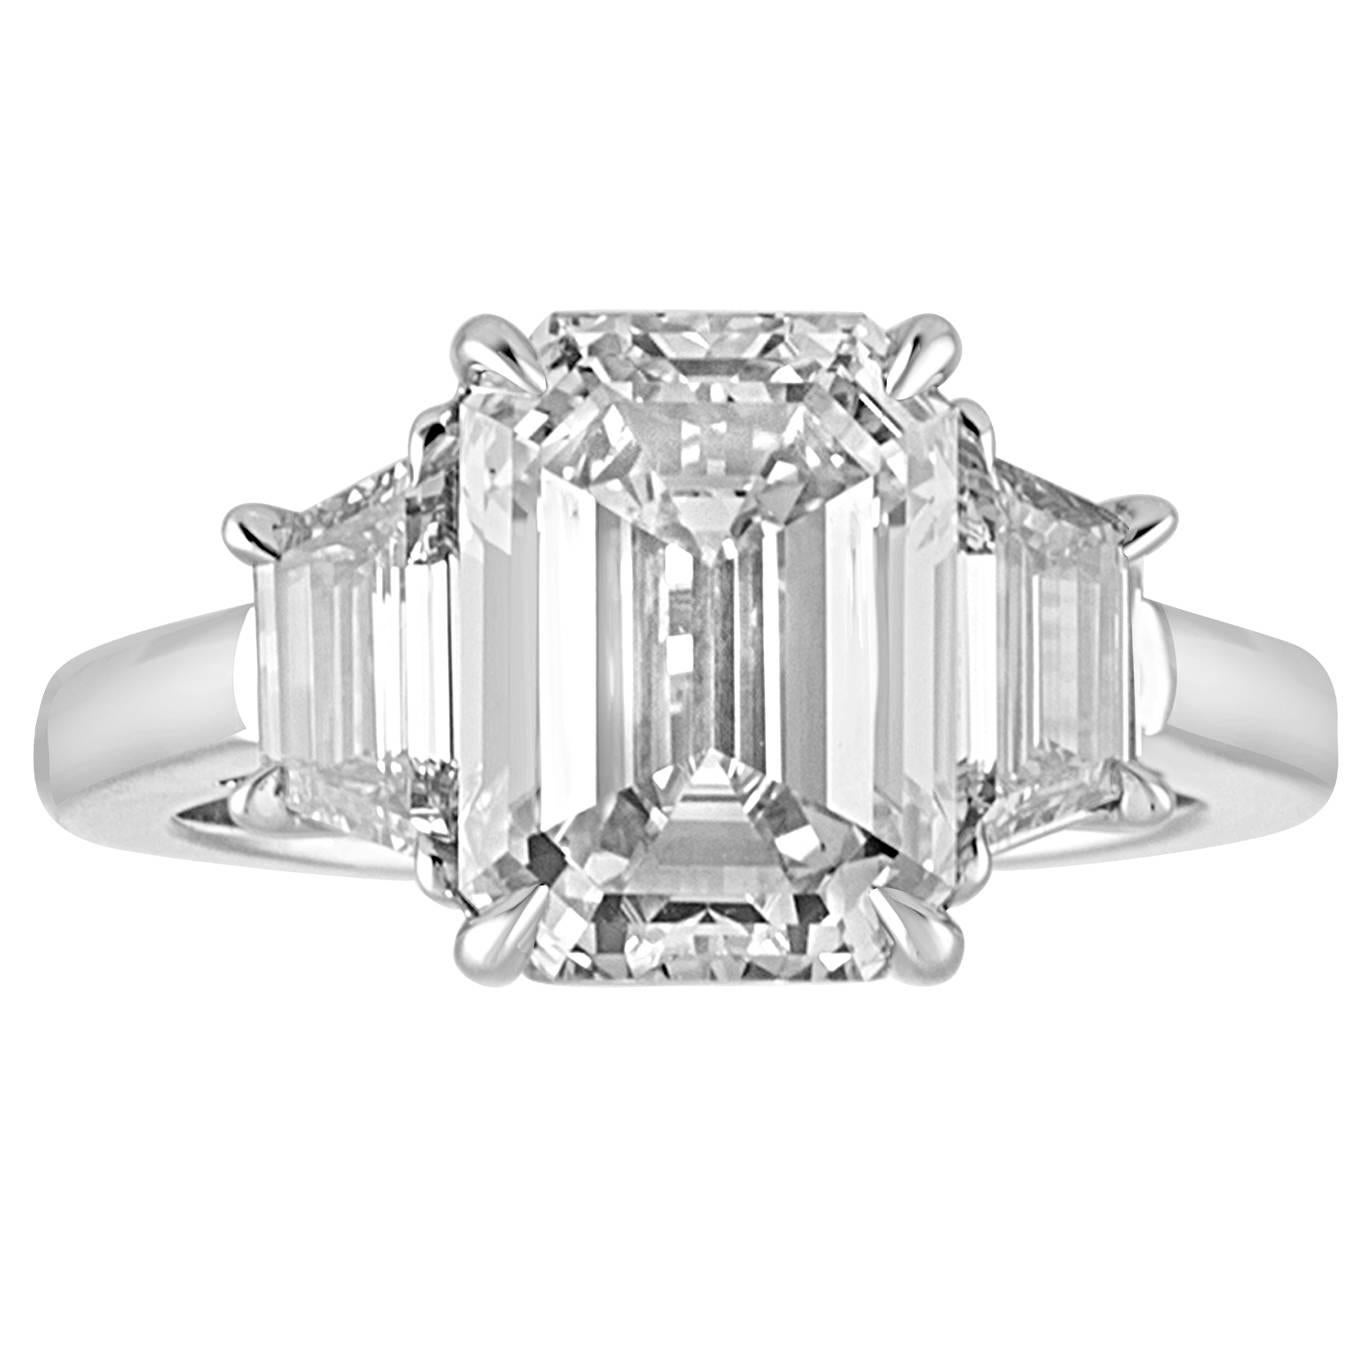 4.08 Carat Emerald Cut Diamond Set in Platinum Ring Mounting